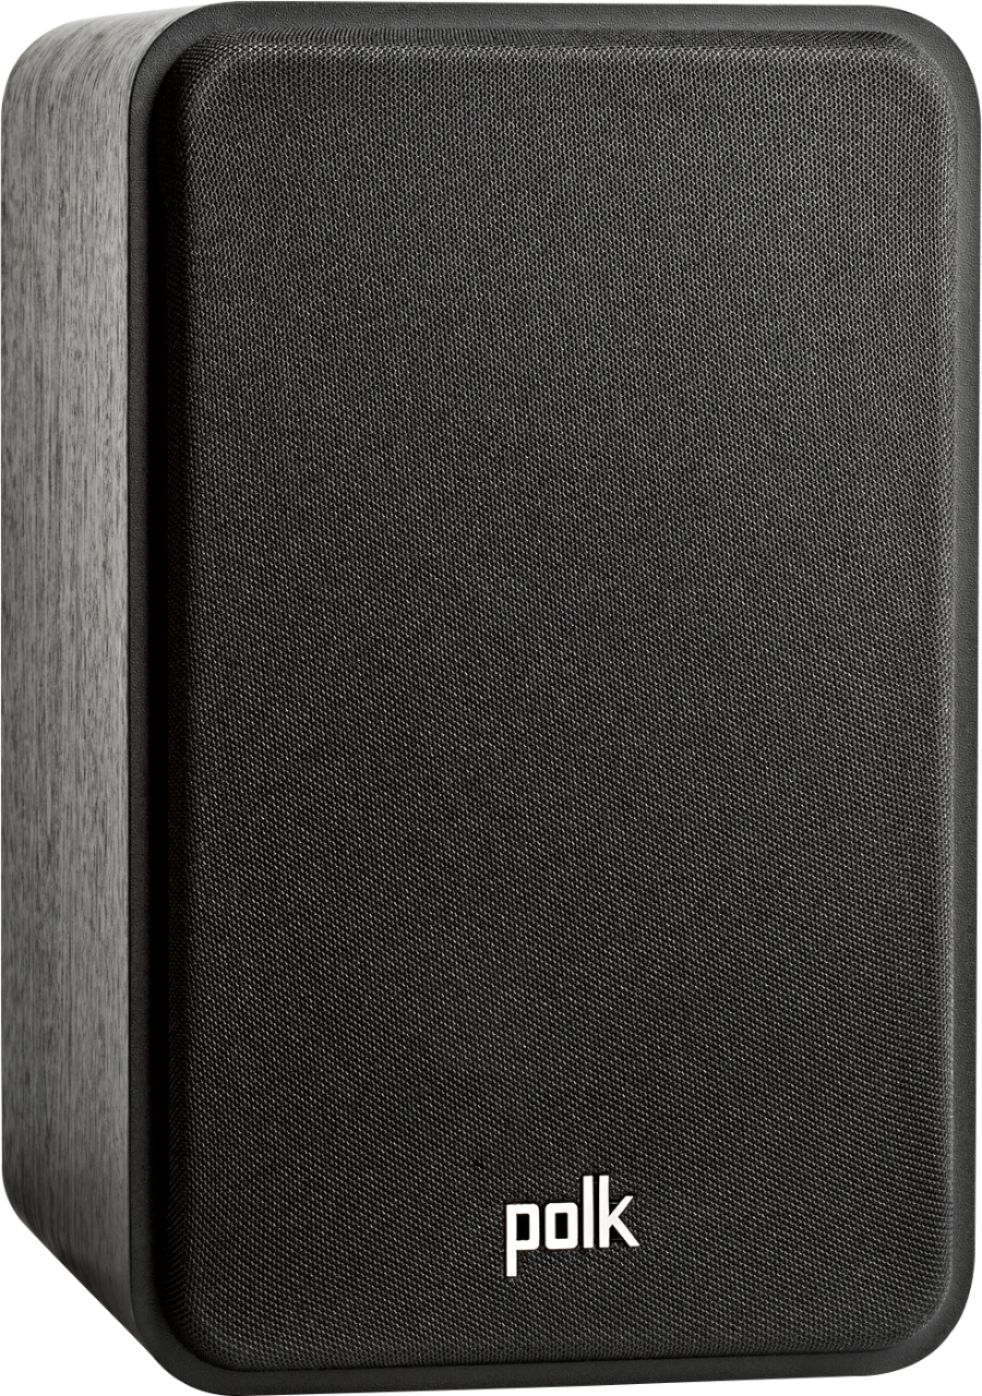 Angle View: Polk Audio - Signature Series S15 Bookshelf Speakers (Pair) - Black